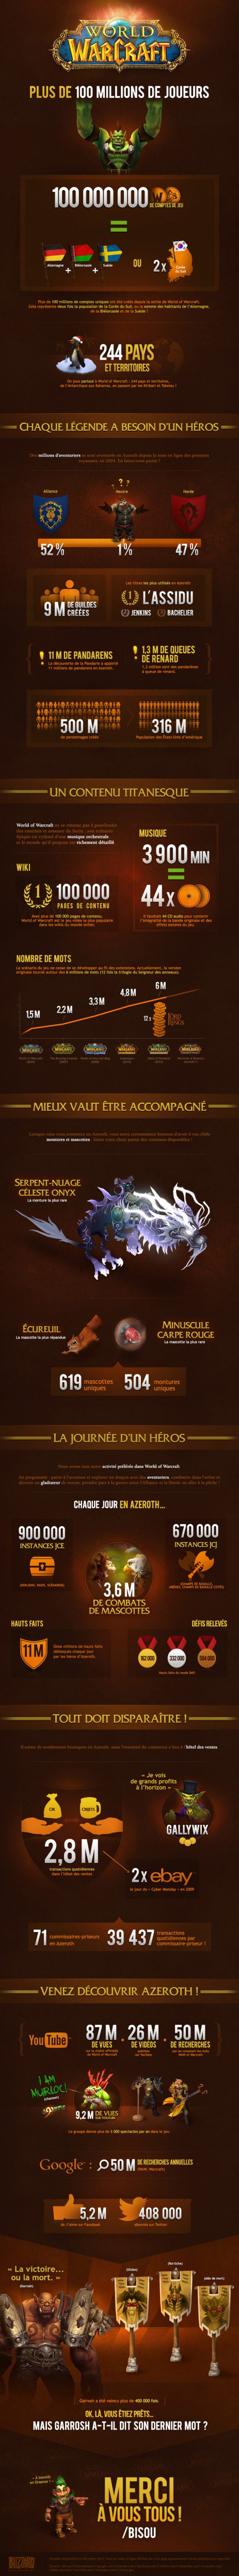 Infographie World of Warcraft